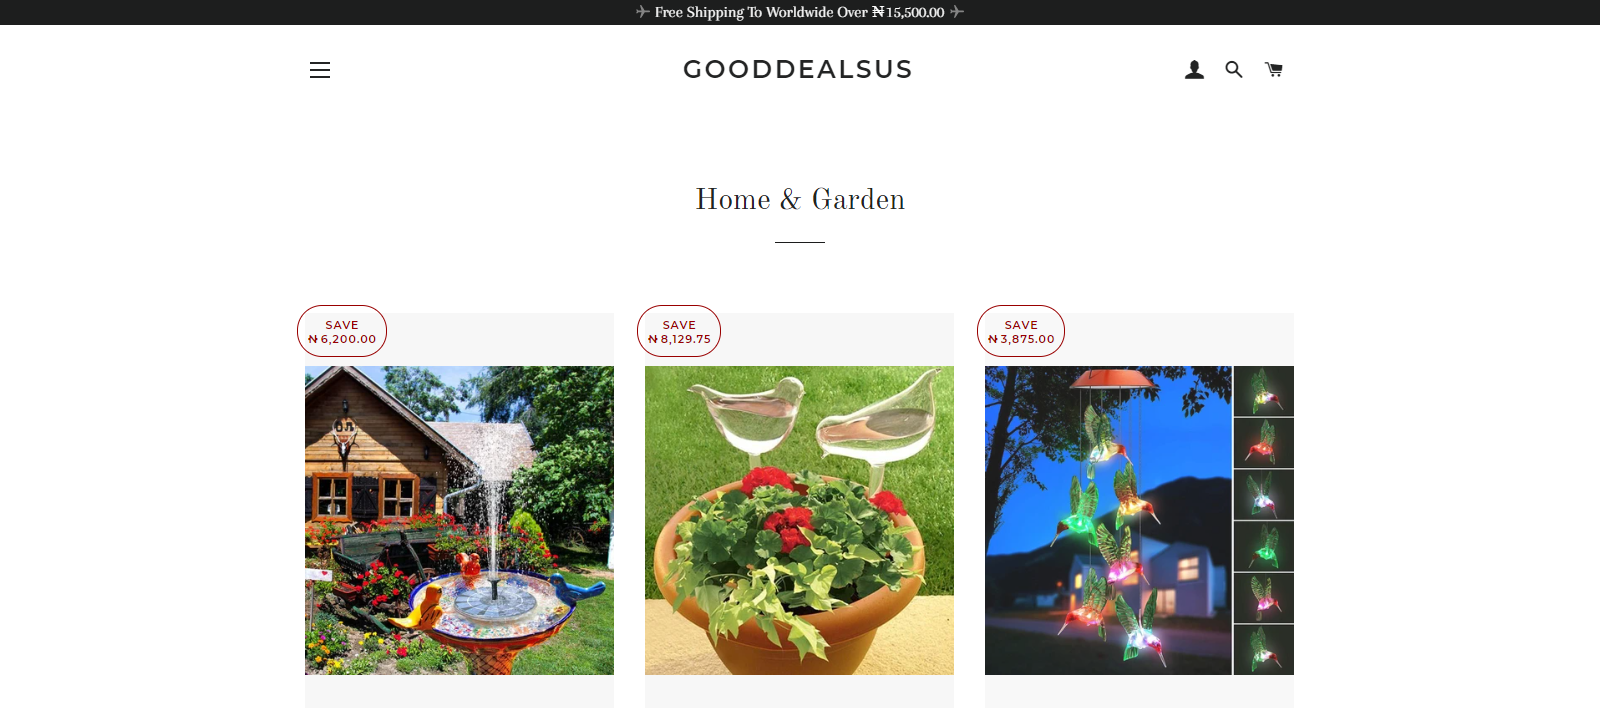 Gooddealsus Homepage Image